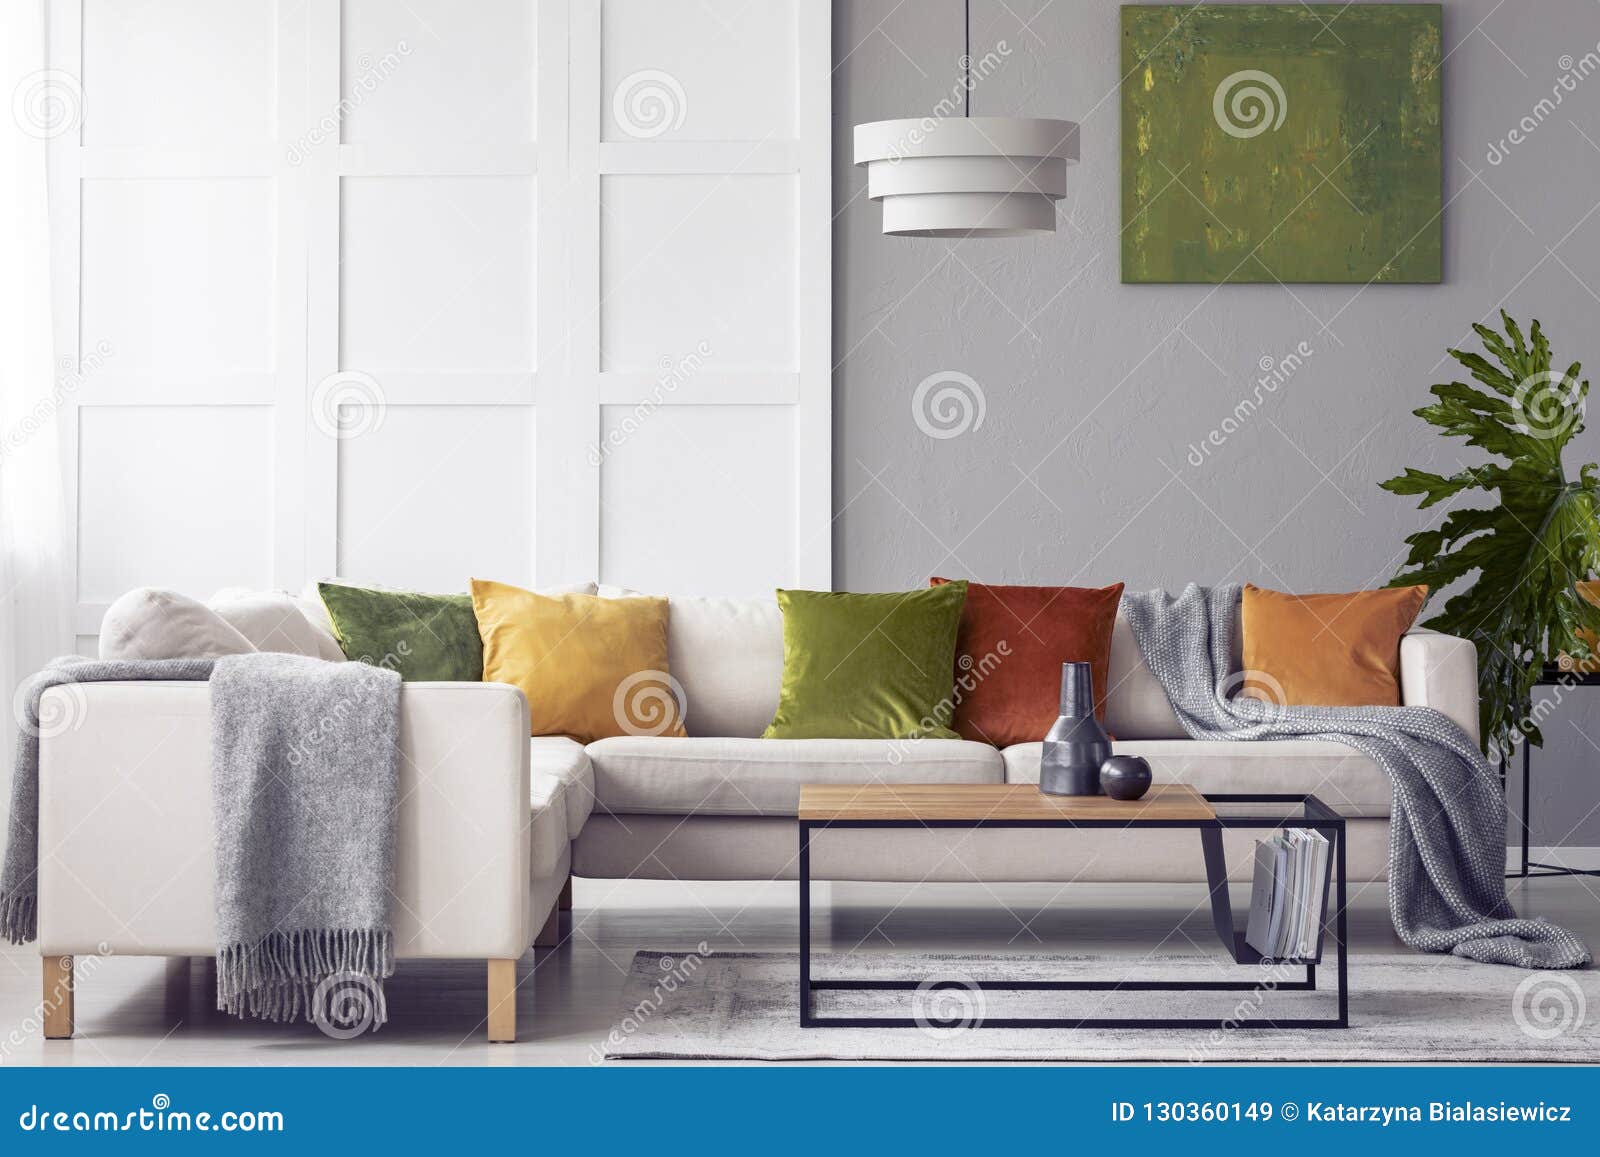 Green Cushions And Grey Blanket On Corner Sofa In Living